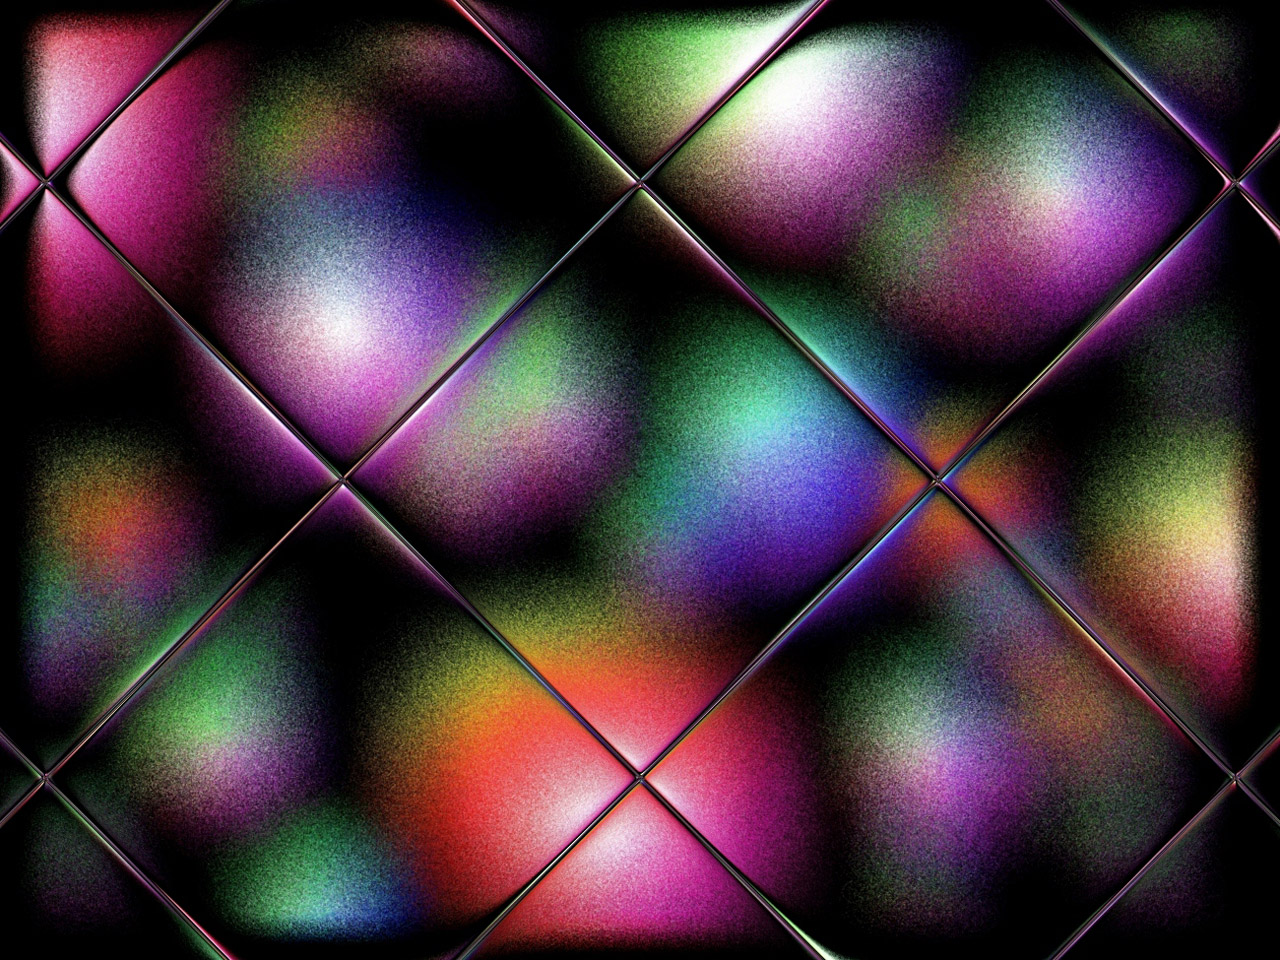 Soft balls in color behind glass tile